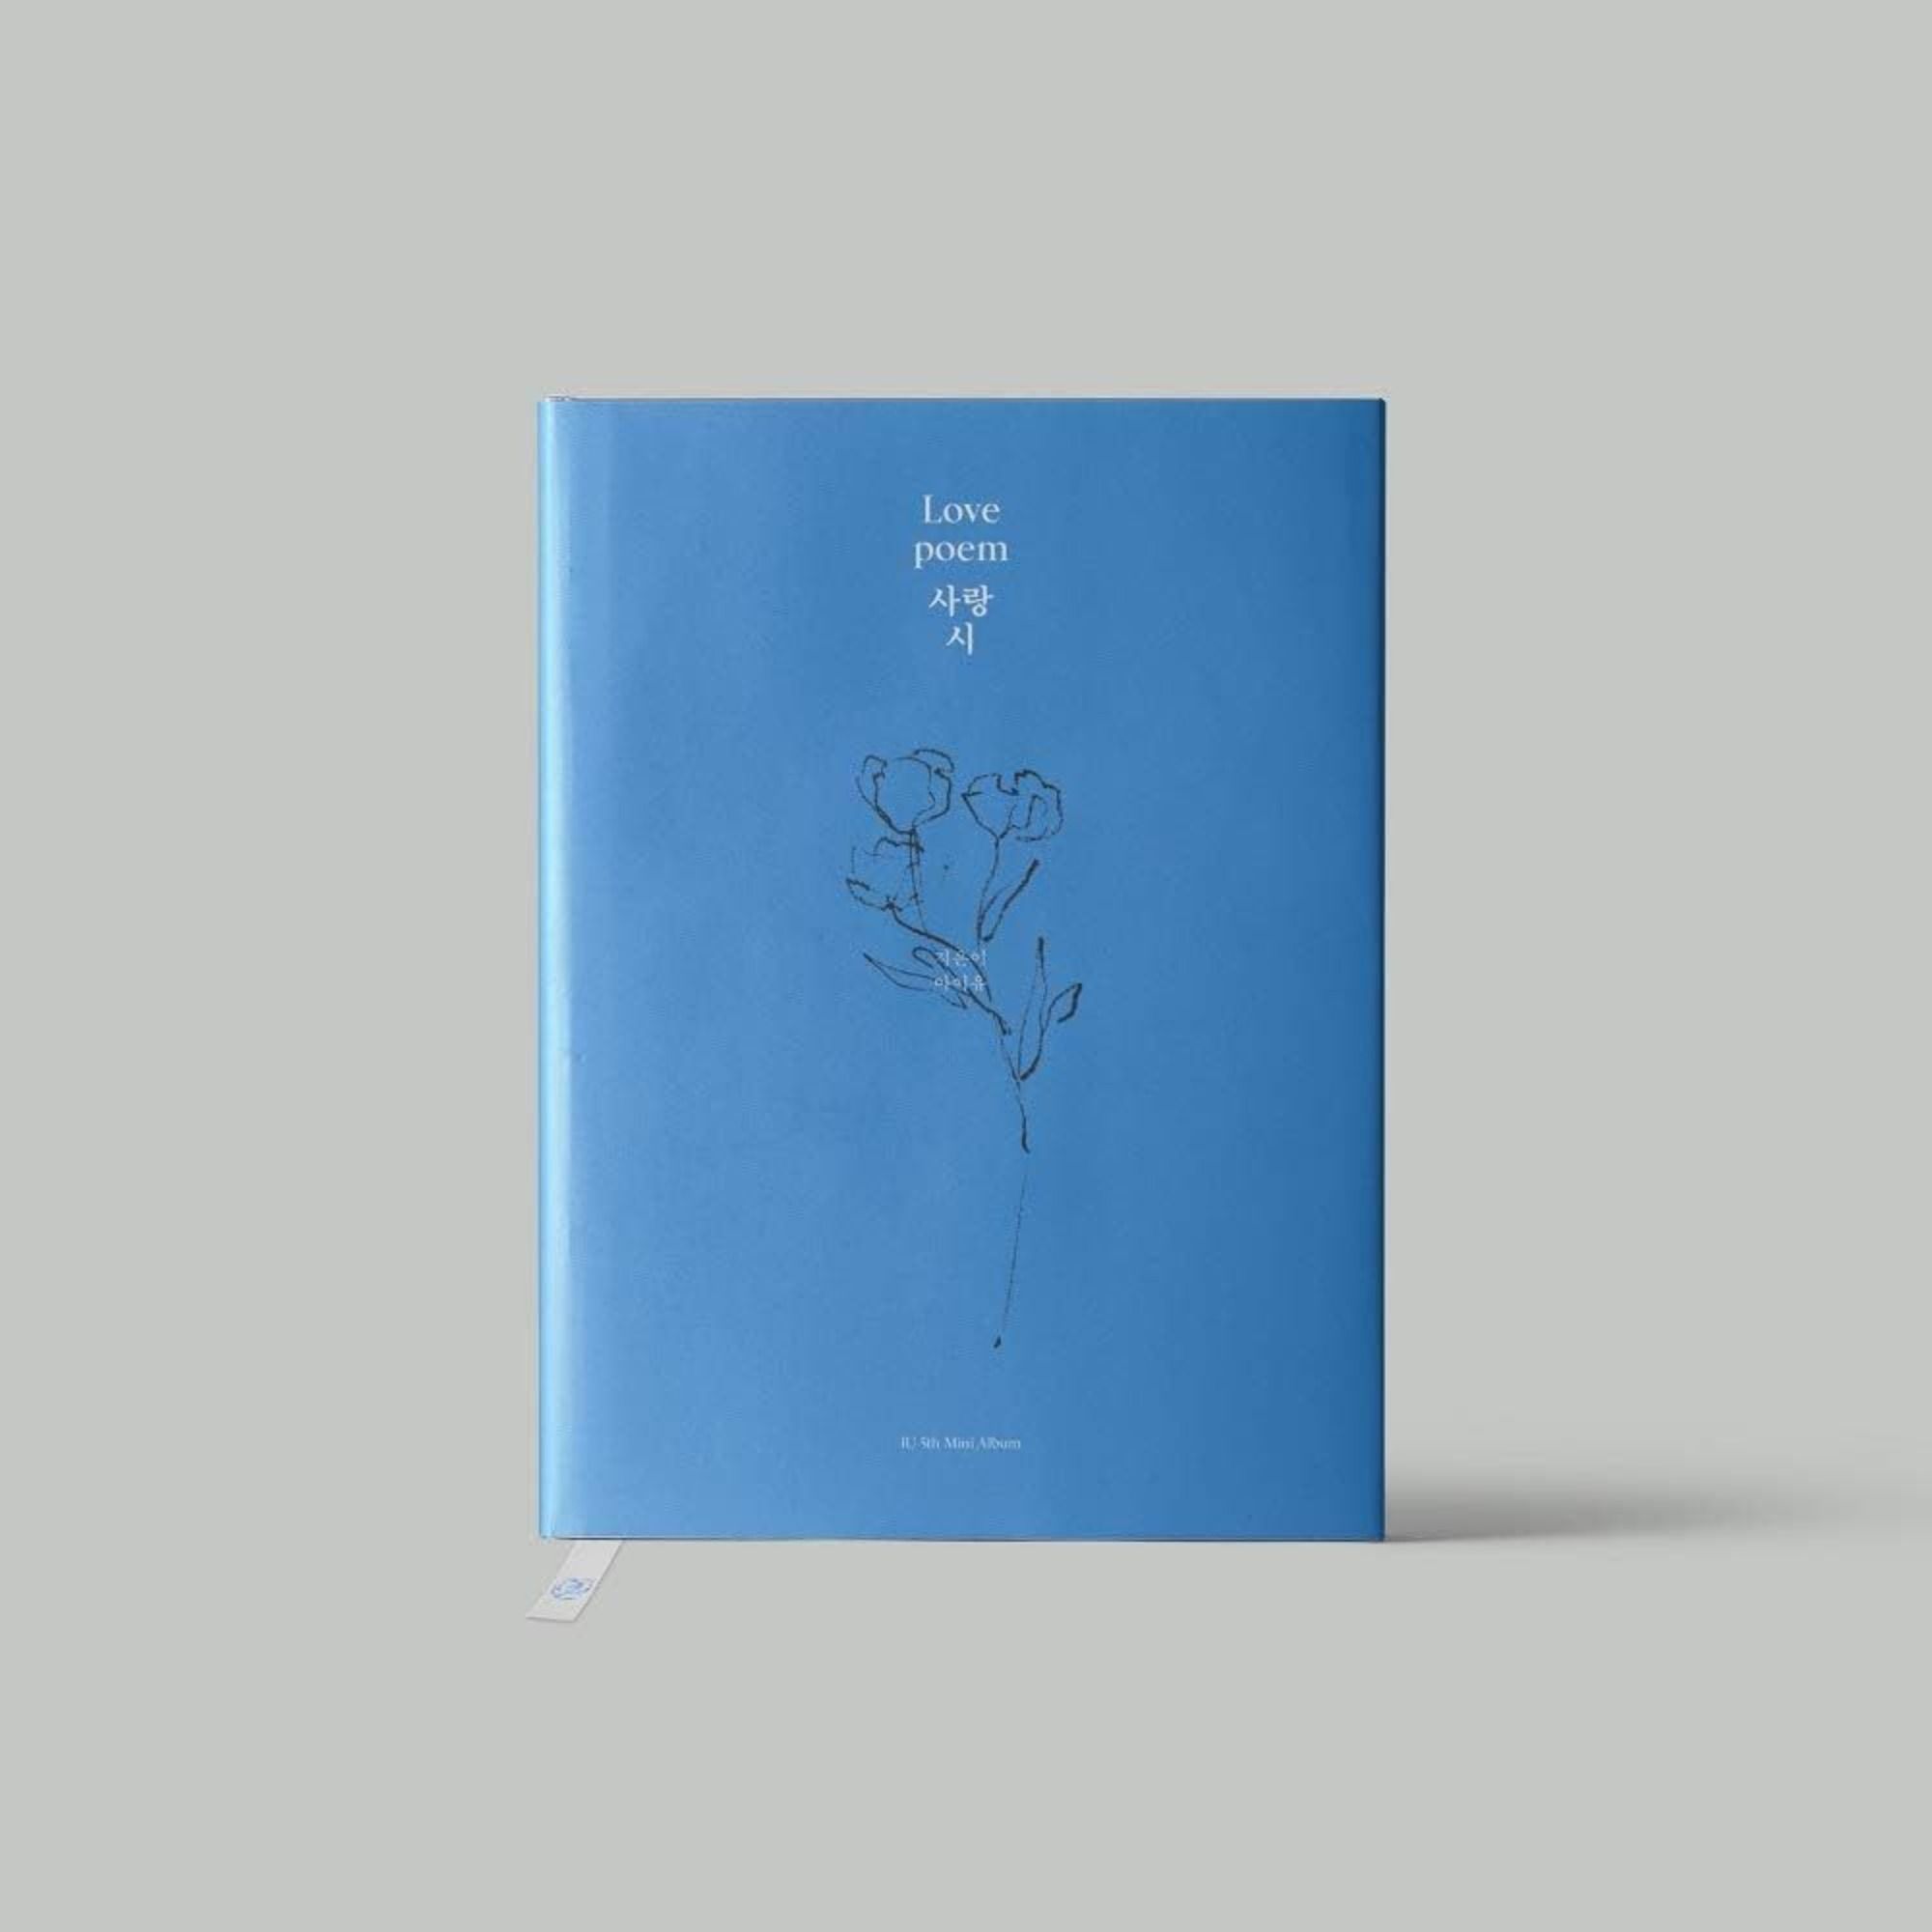 Love wins iu перевод. Альбом IU Love poem. IU Love poem обложка. Обложки альбомов IU. IU Love poem album Cover.